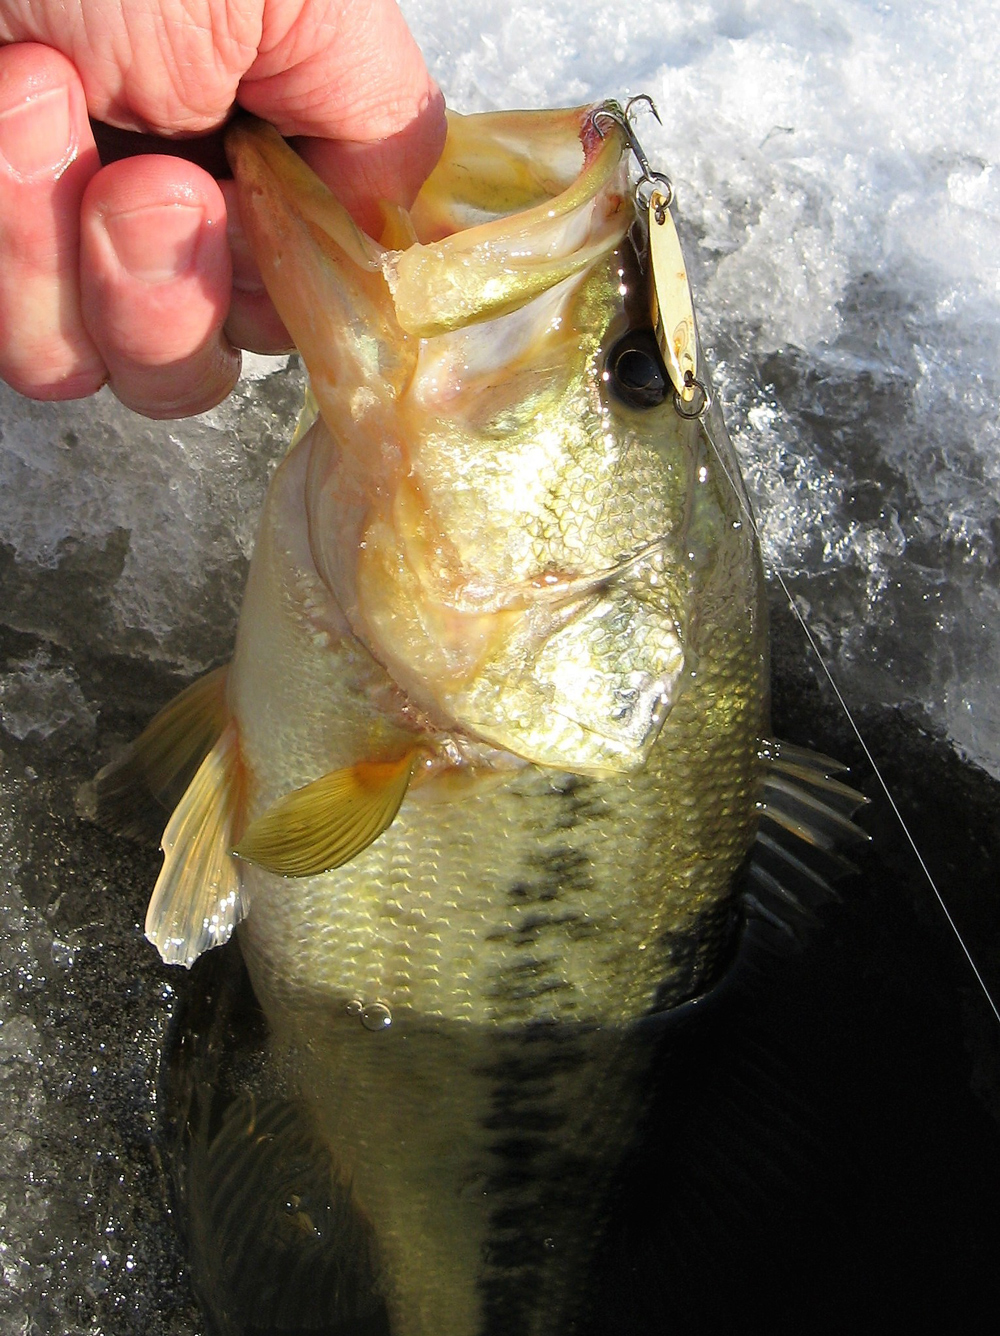 largemouth bass caught ice fishing